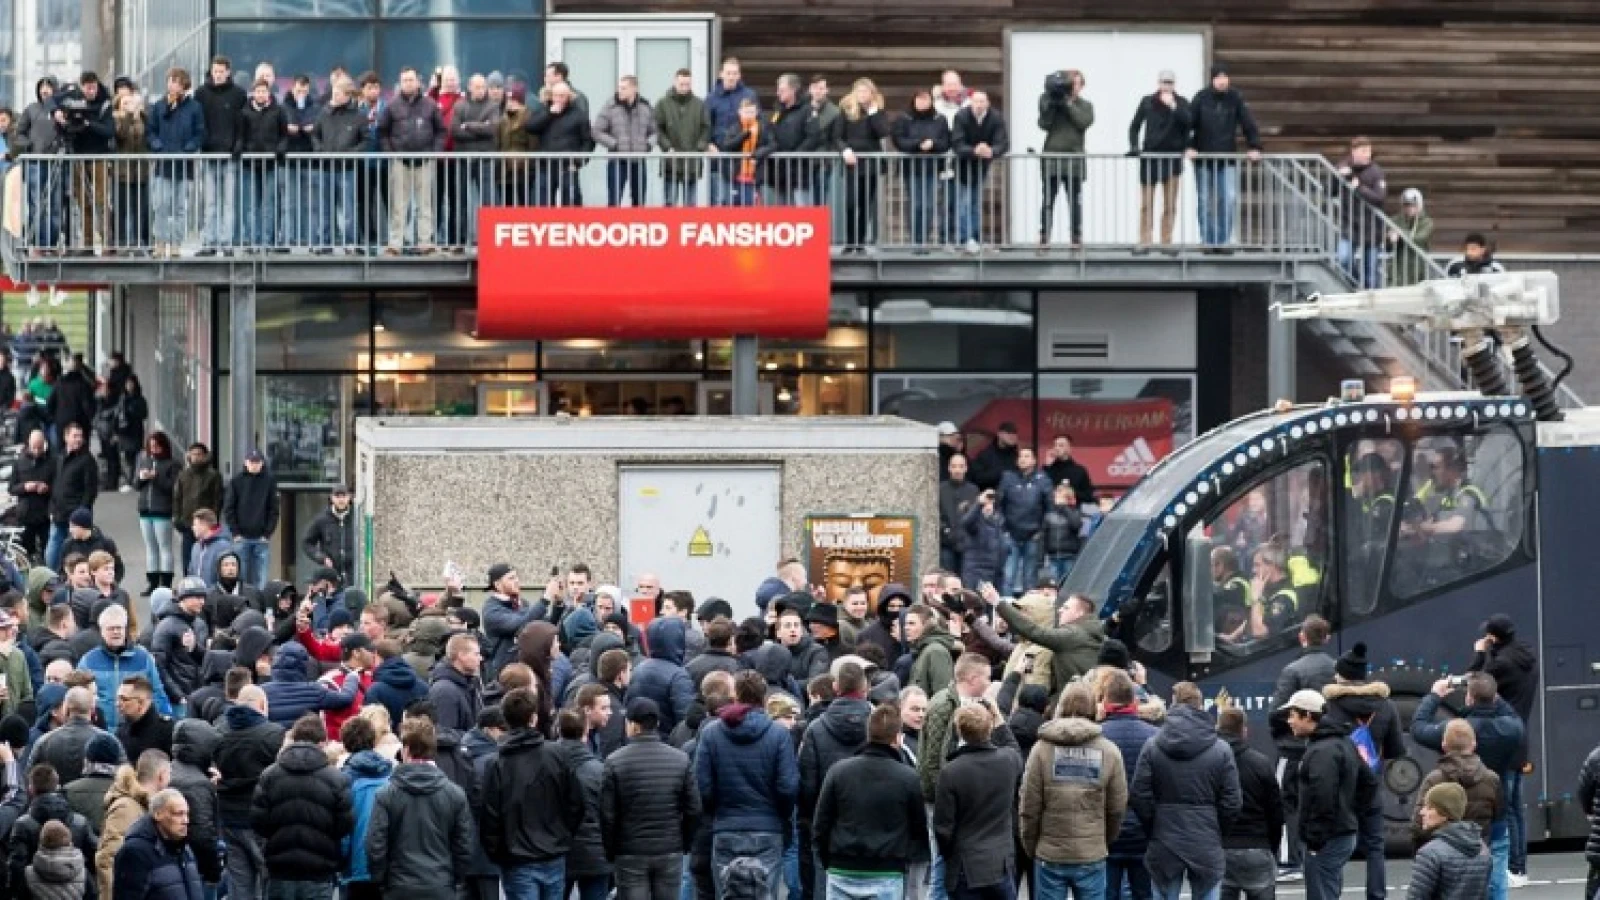 OM eist pittige straffen tegen Feyenoordsupporters